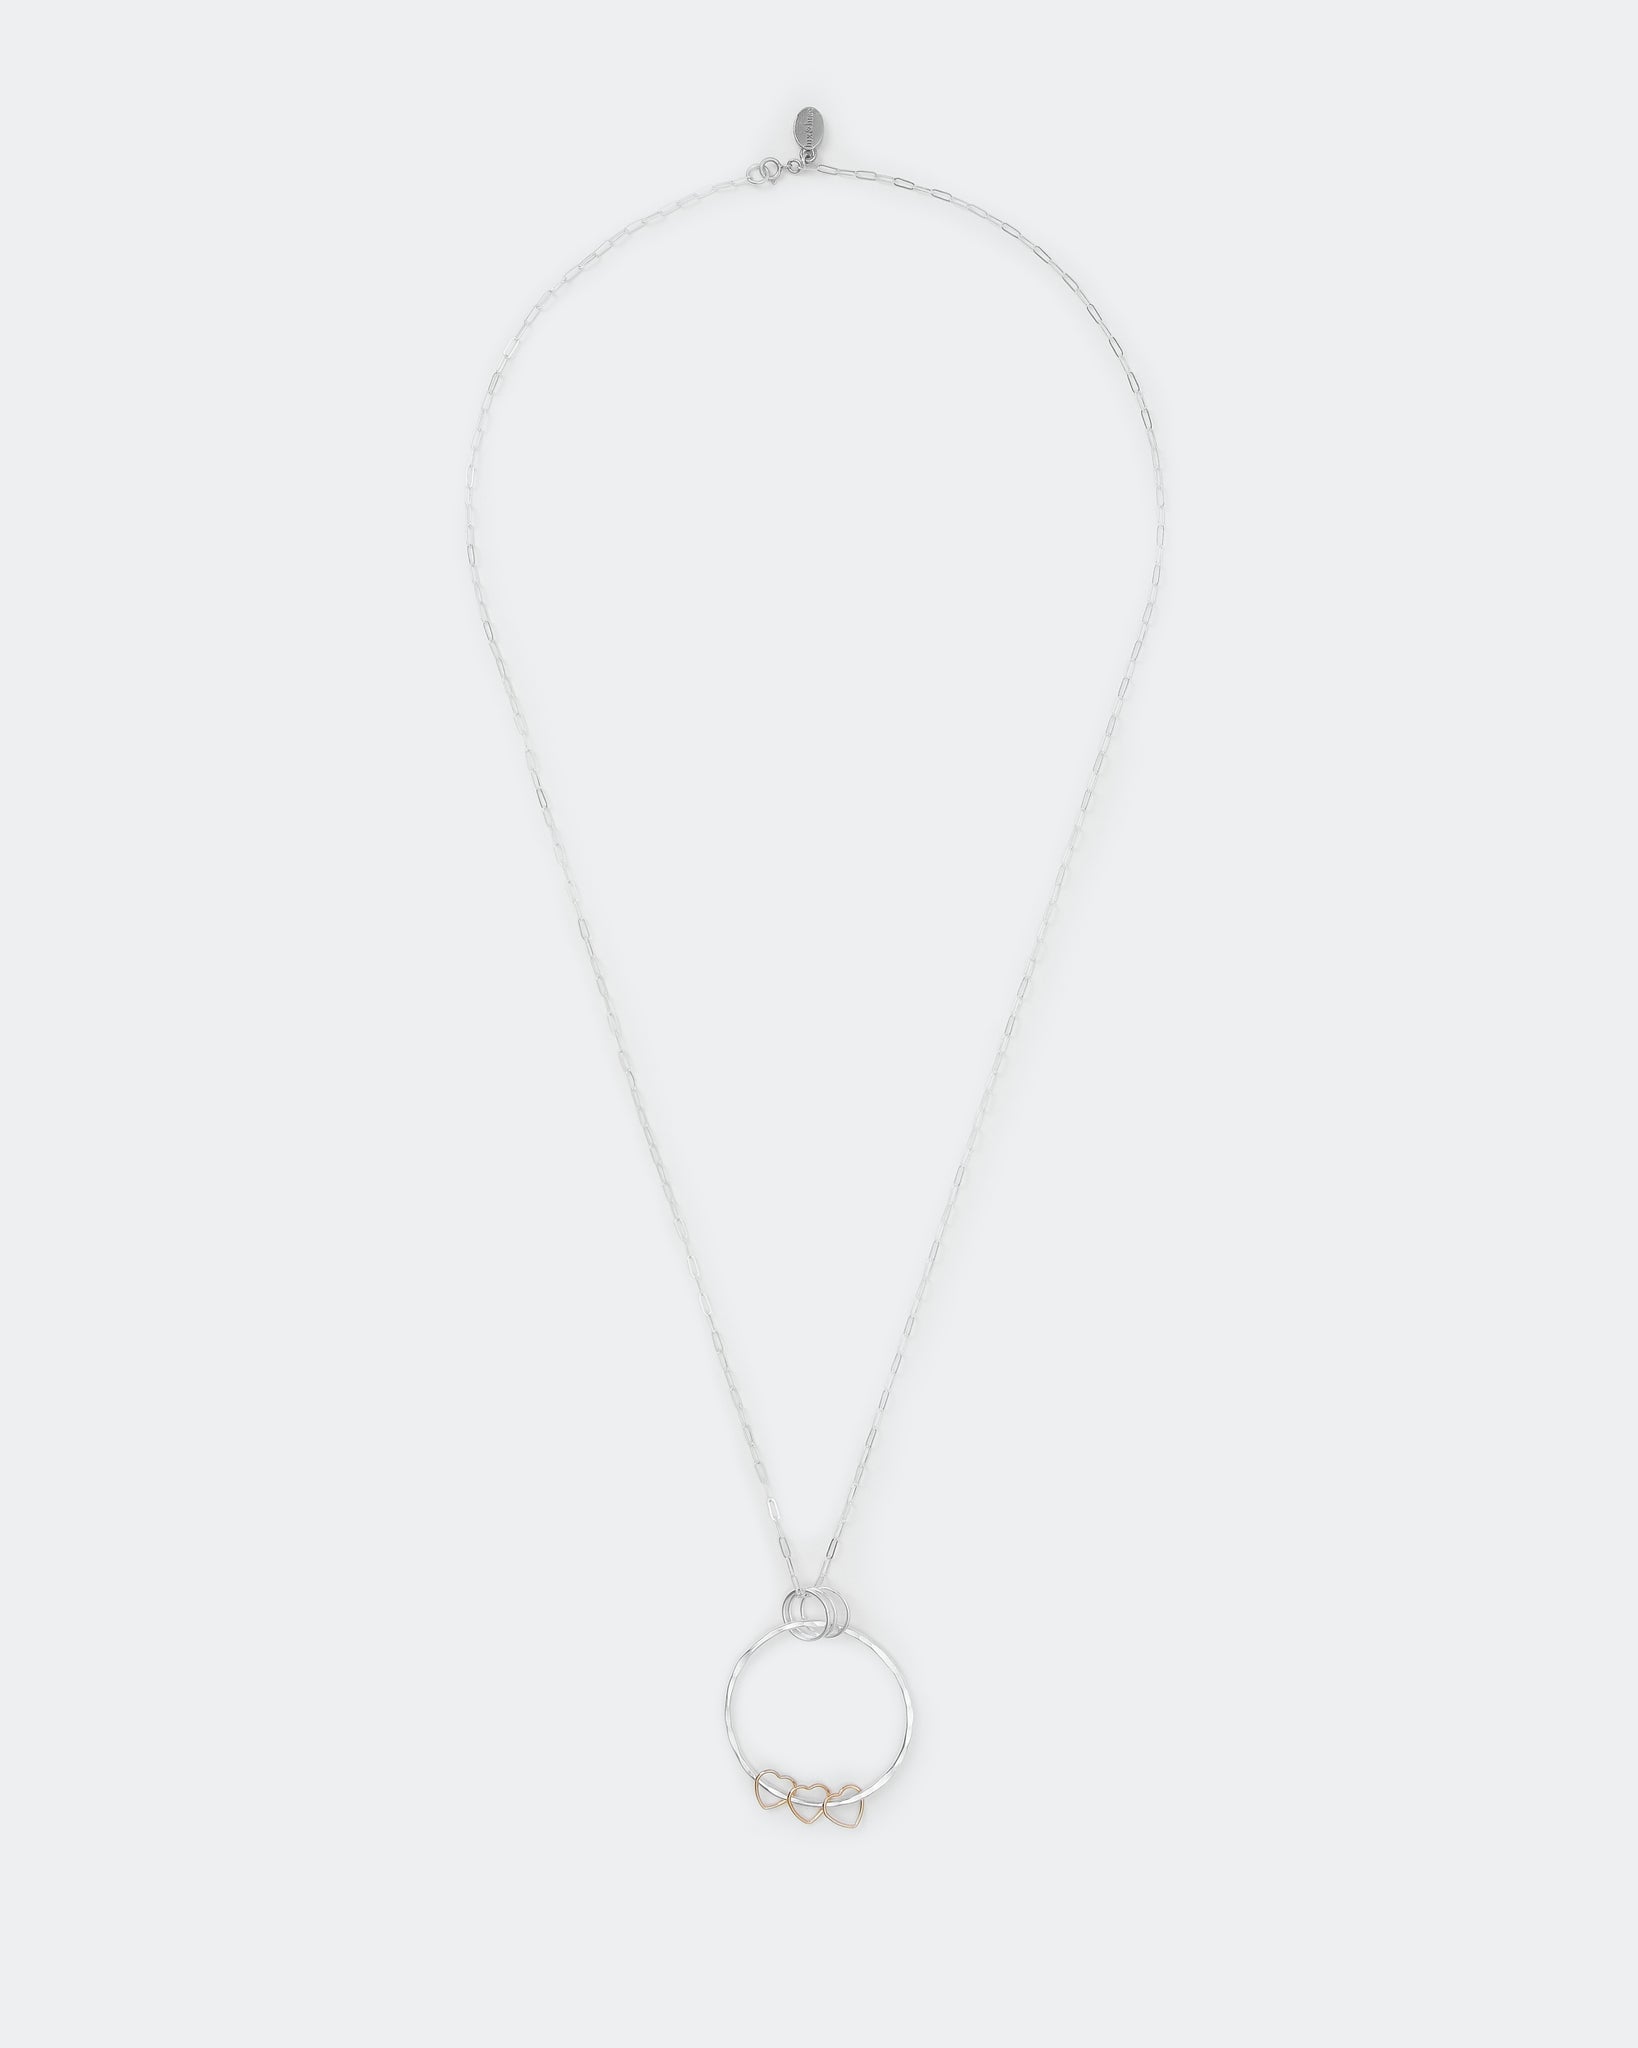 Willa Heart Charm - Fidget Necklace